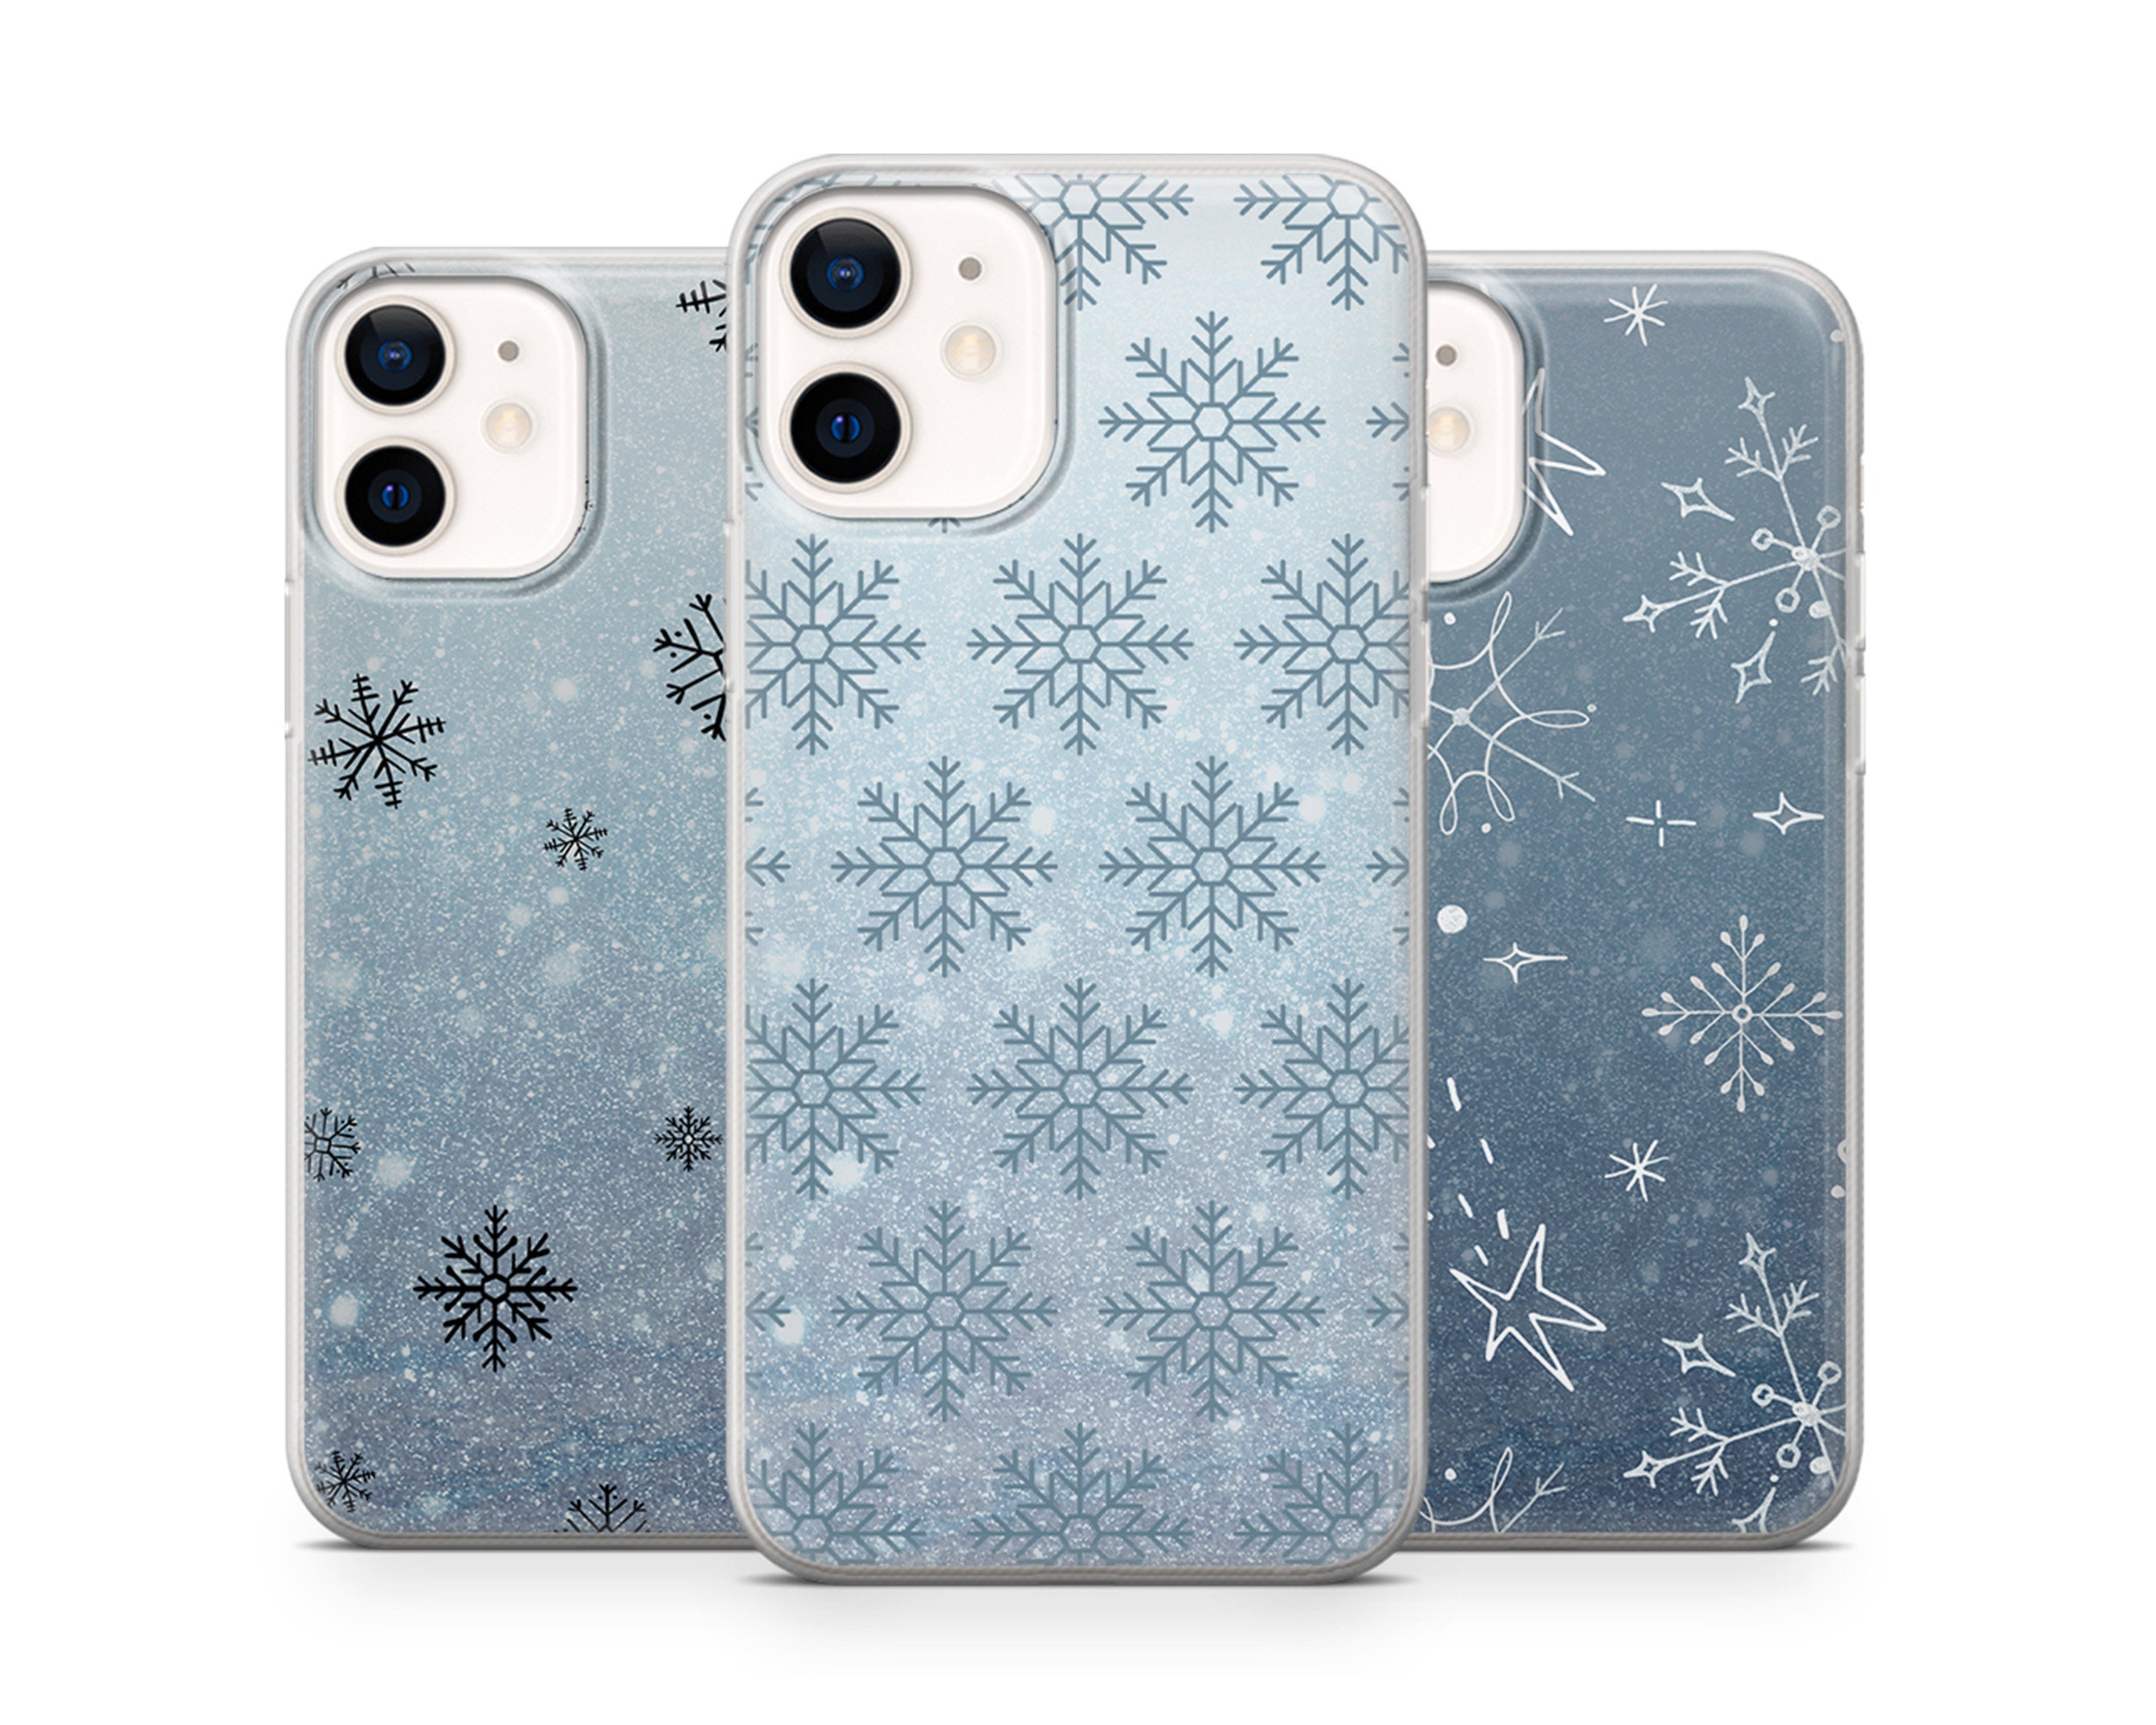 Diamond Glitter Snowflake Decals, Self Adhesive Christmas Stickers,  Permanent Transfers, Snowflakes Vinyl Stickers, Sparkly Snow Flakes 